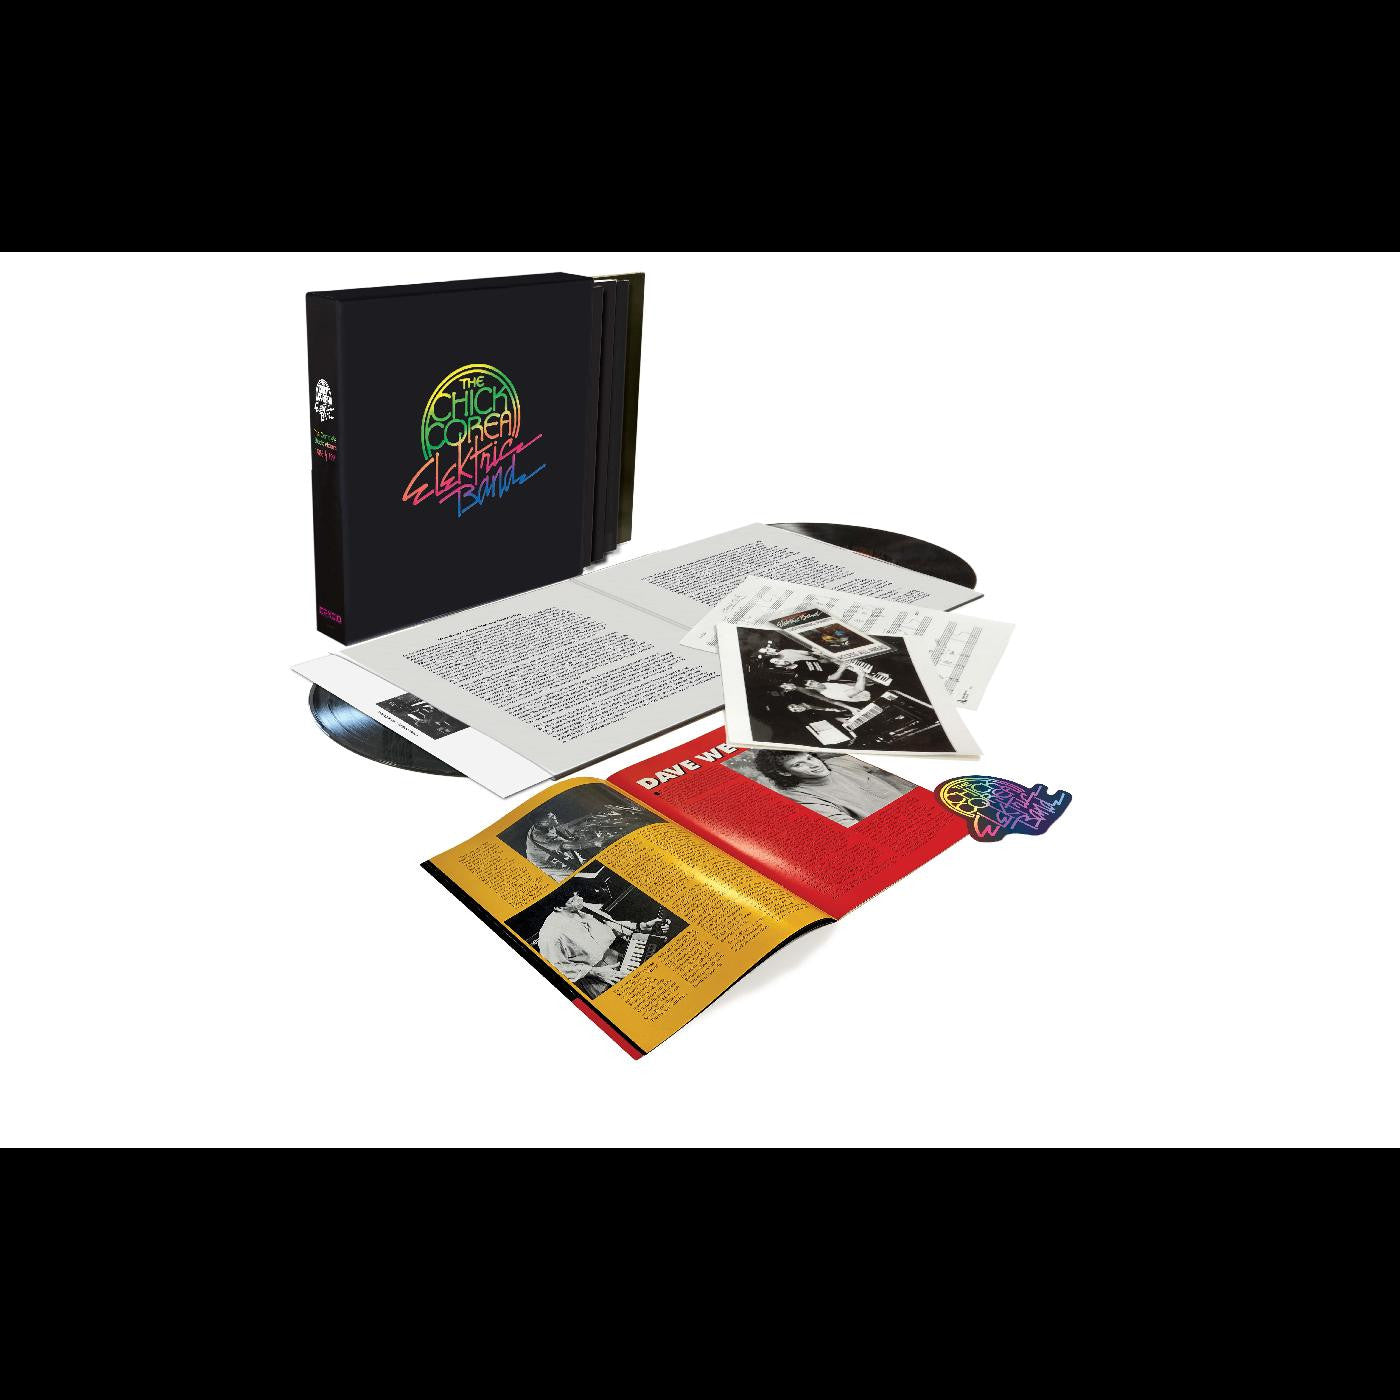 [DAMAGED] Chick Corea Elektric Band - The Complete Studio Recordings 1986-1991 [Box Set]